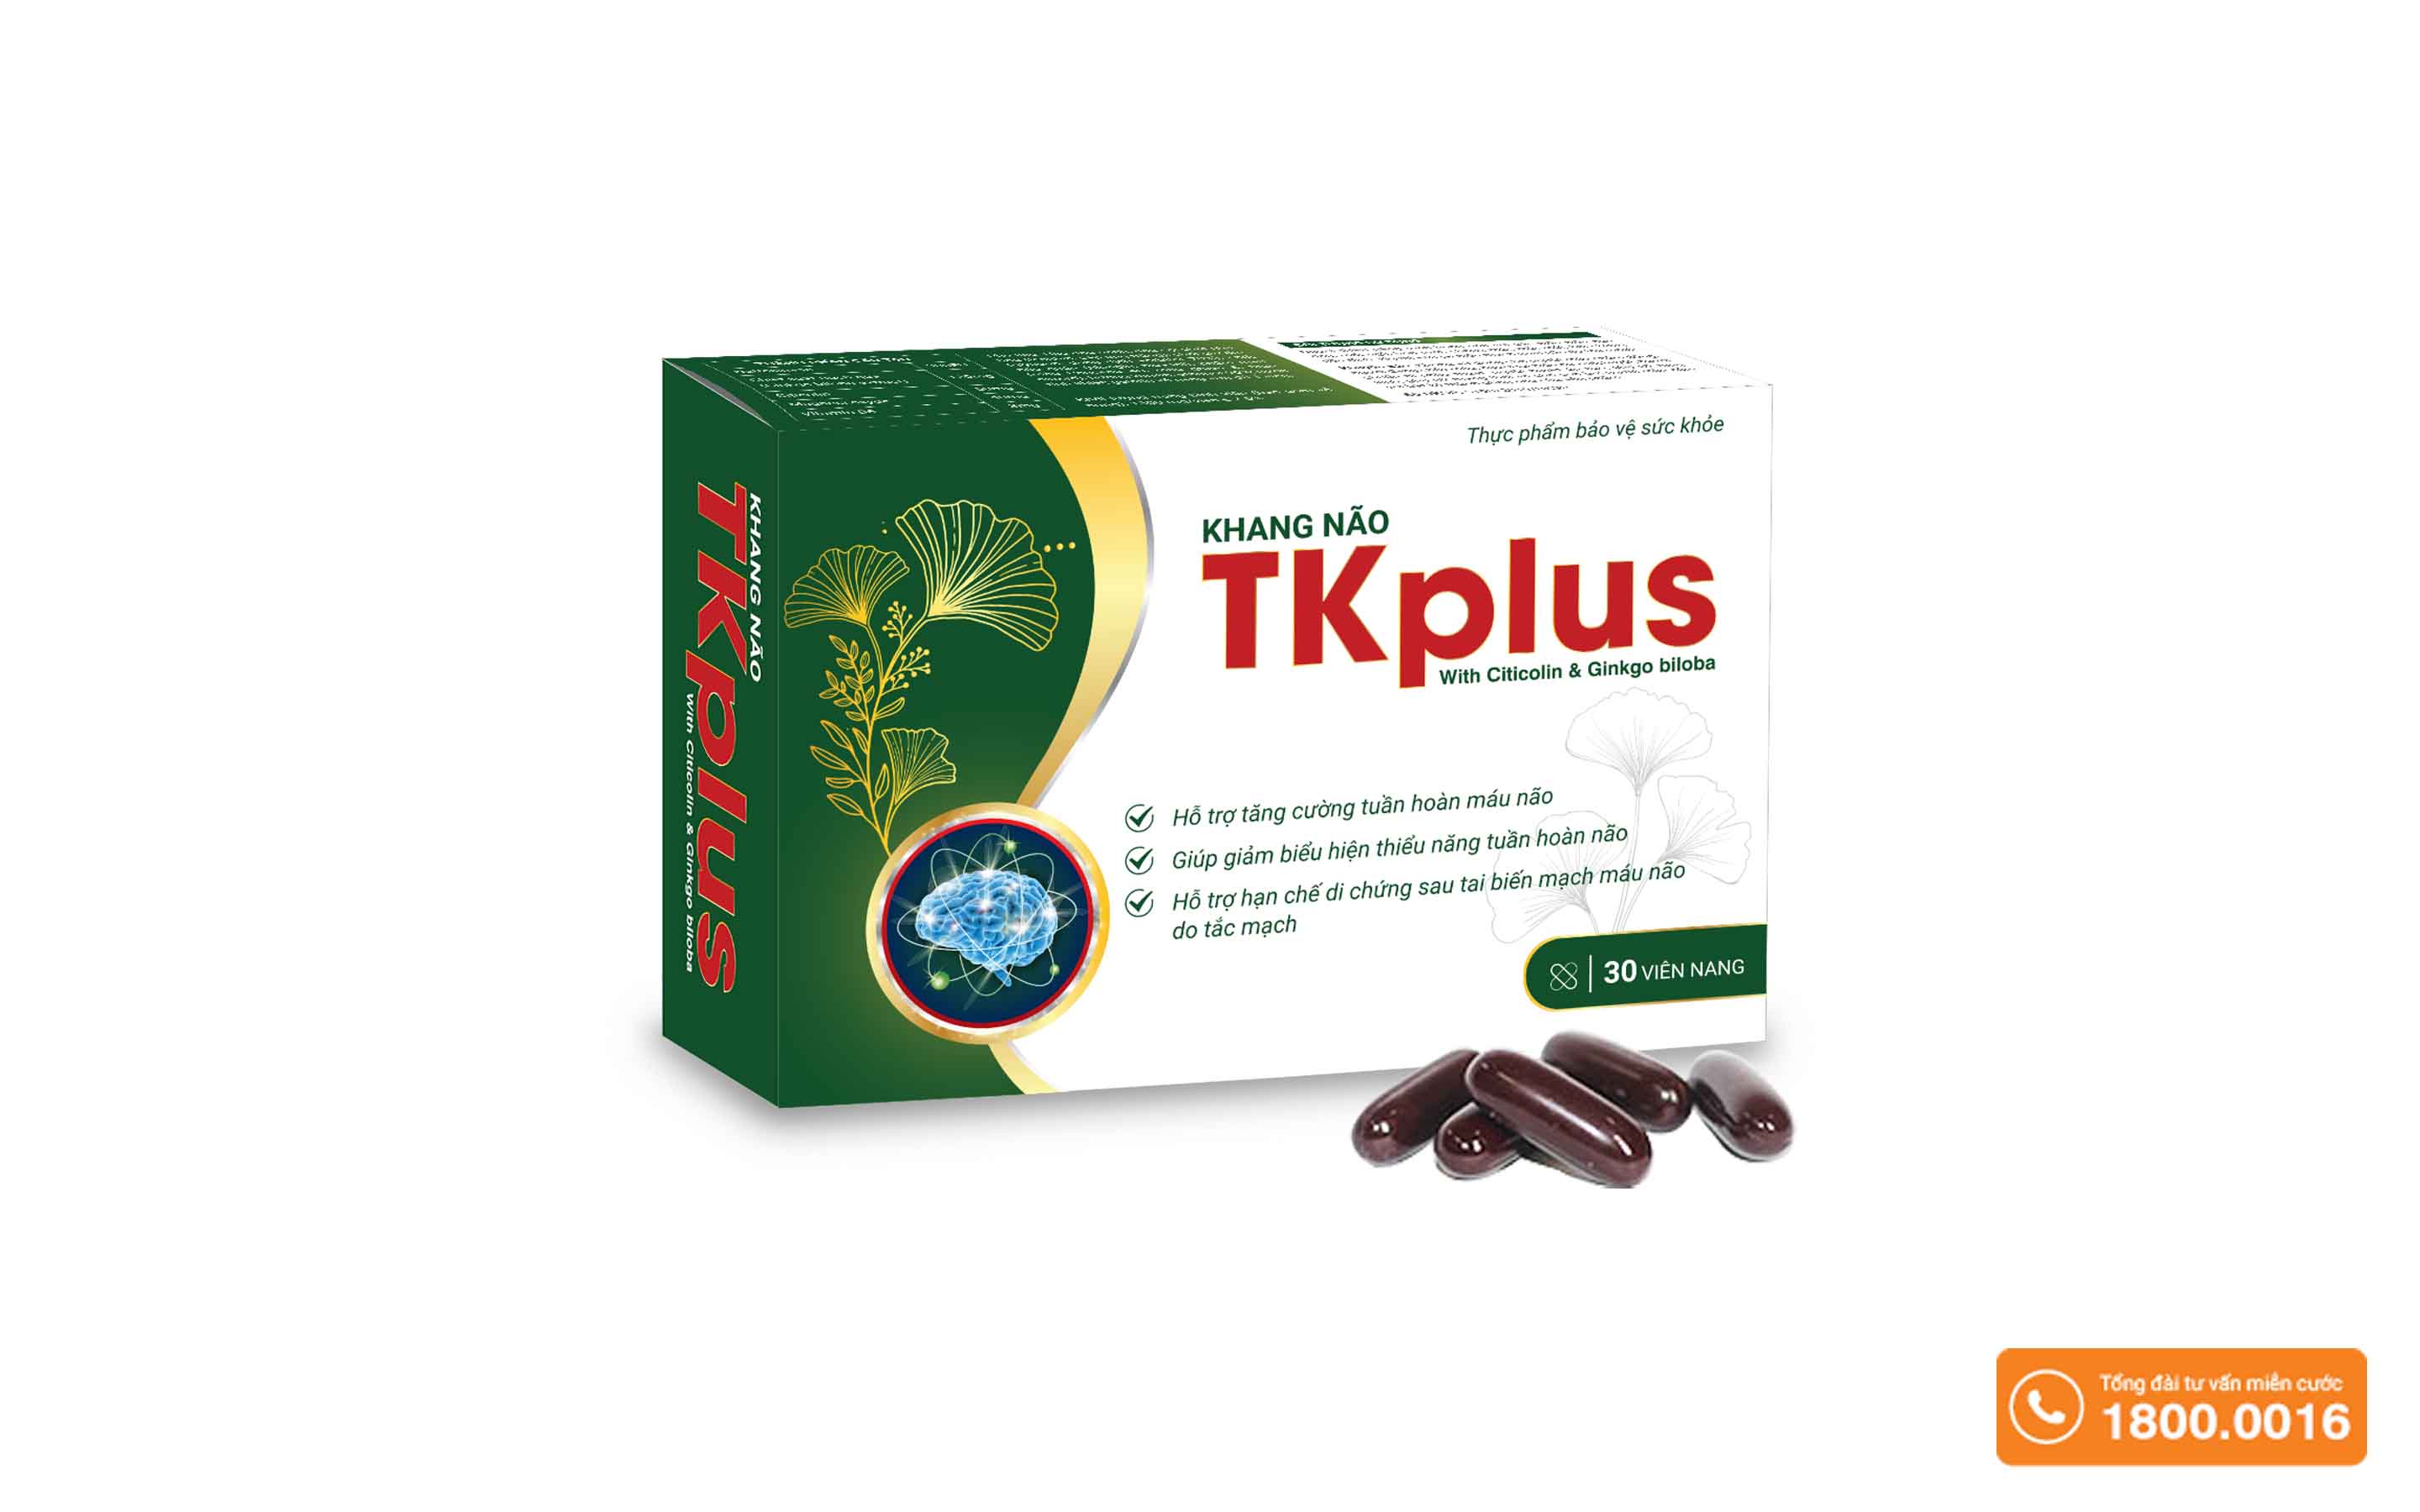 TP bảo vệ sức khỏe Khang não TKplus